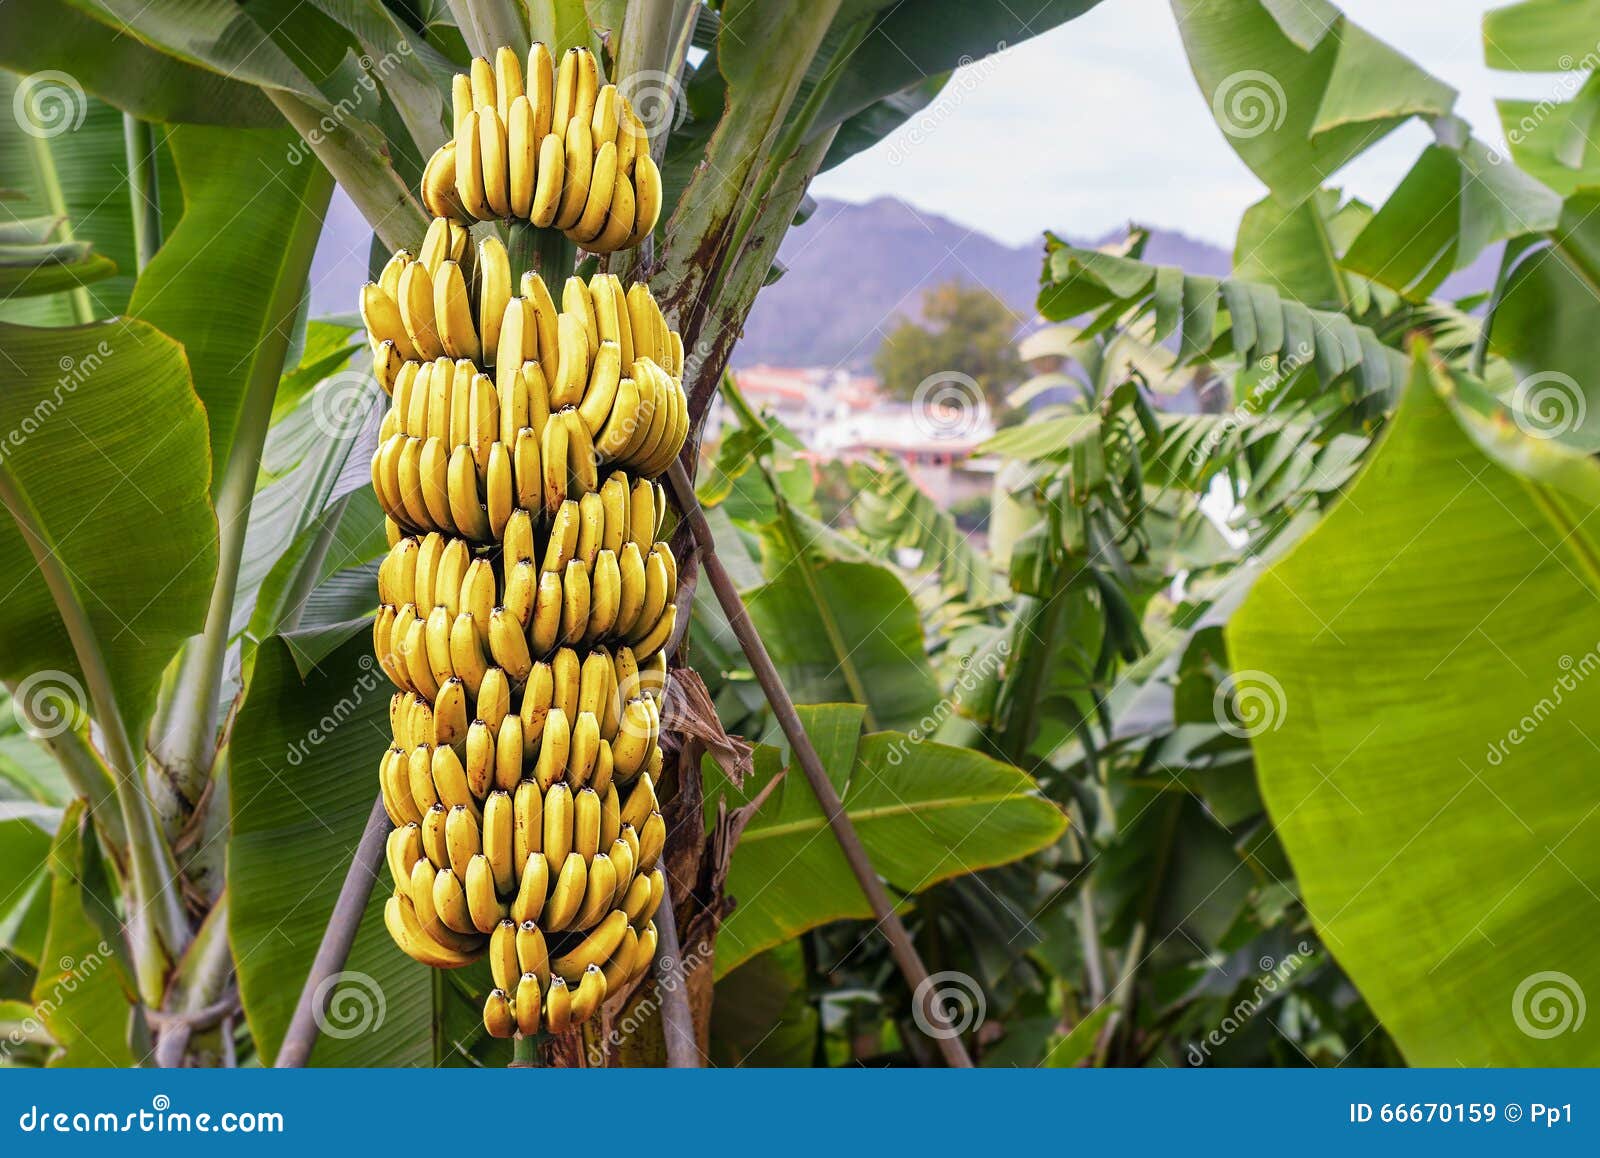 banana tree with a bunch bananas